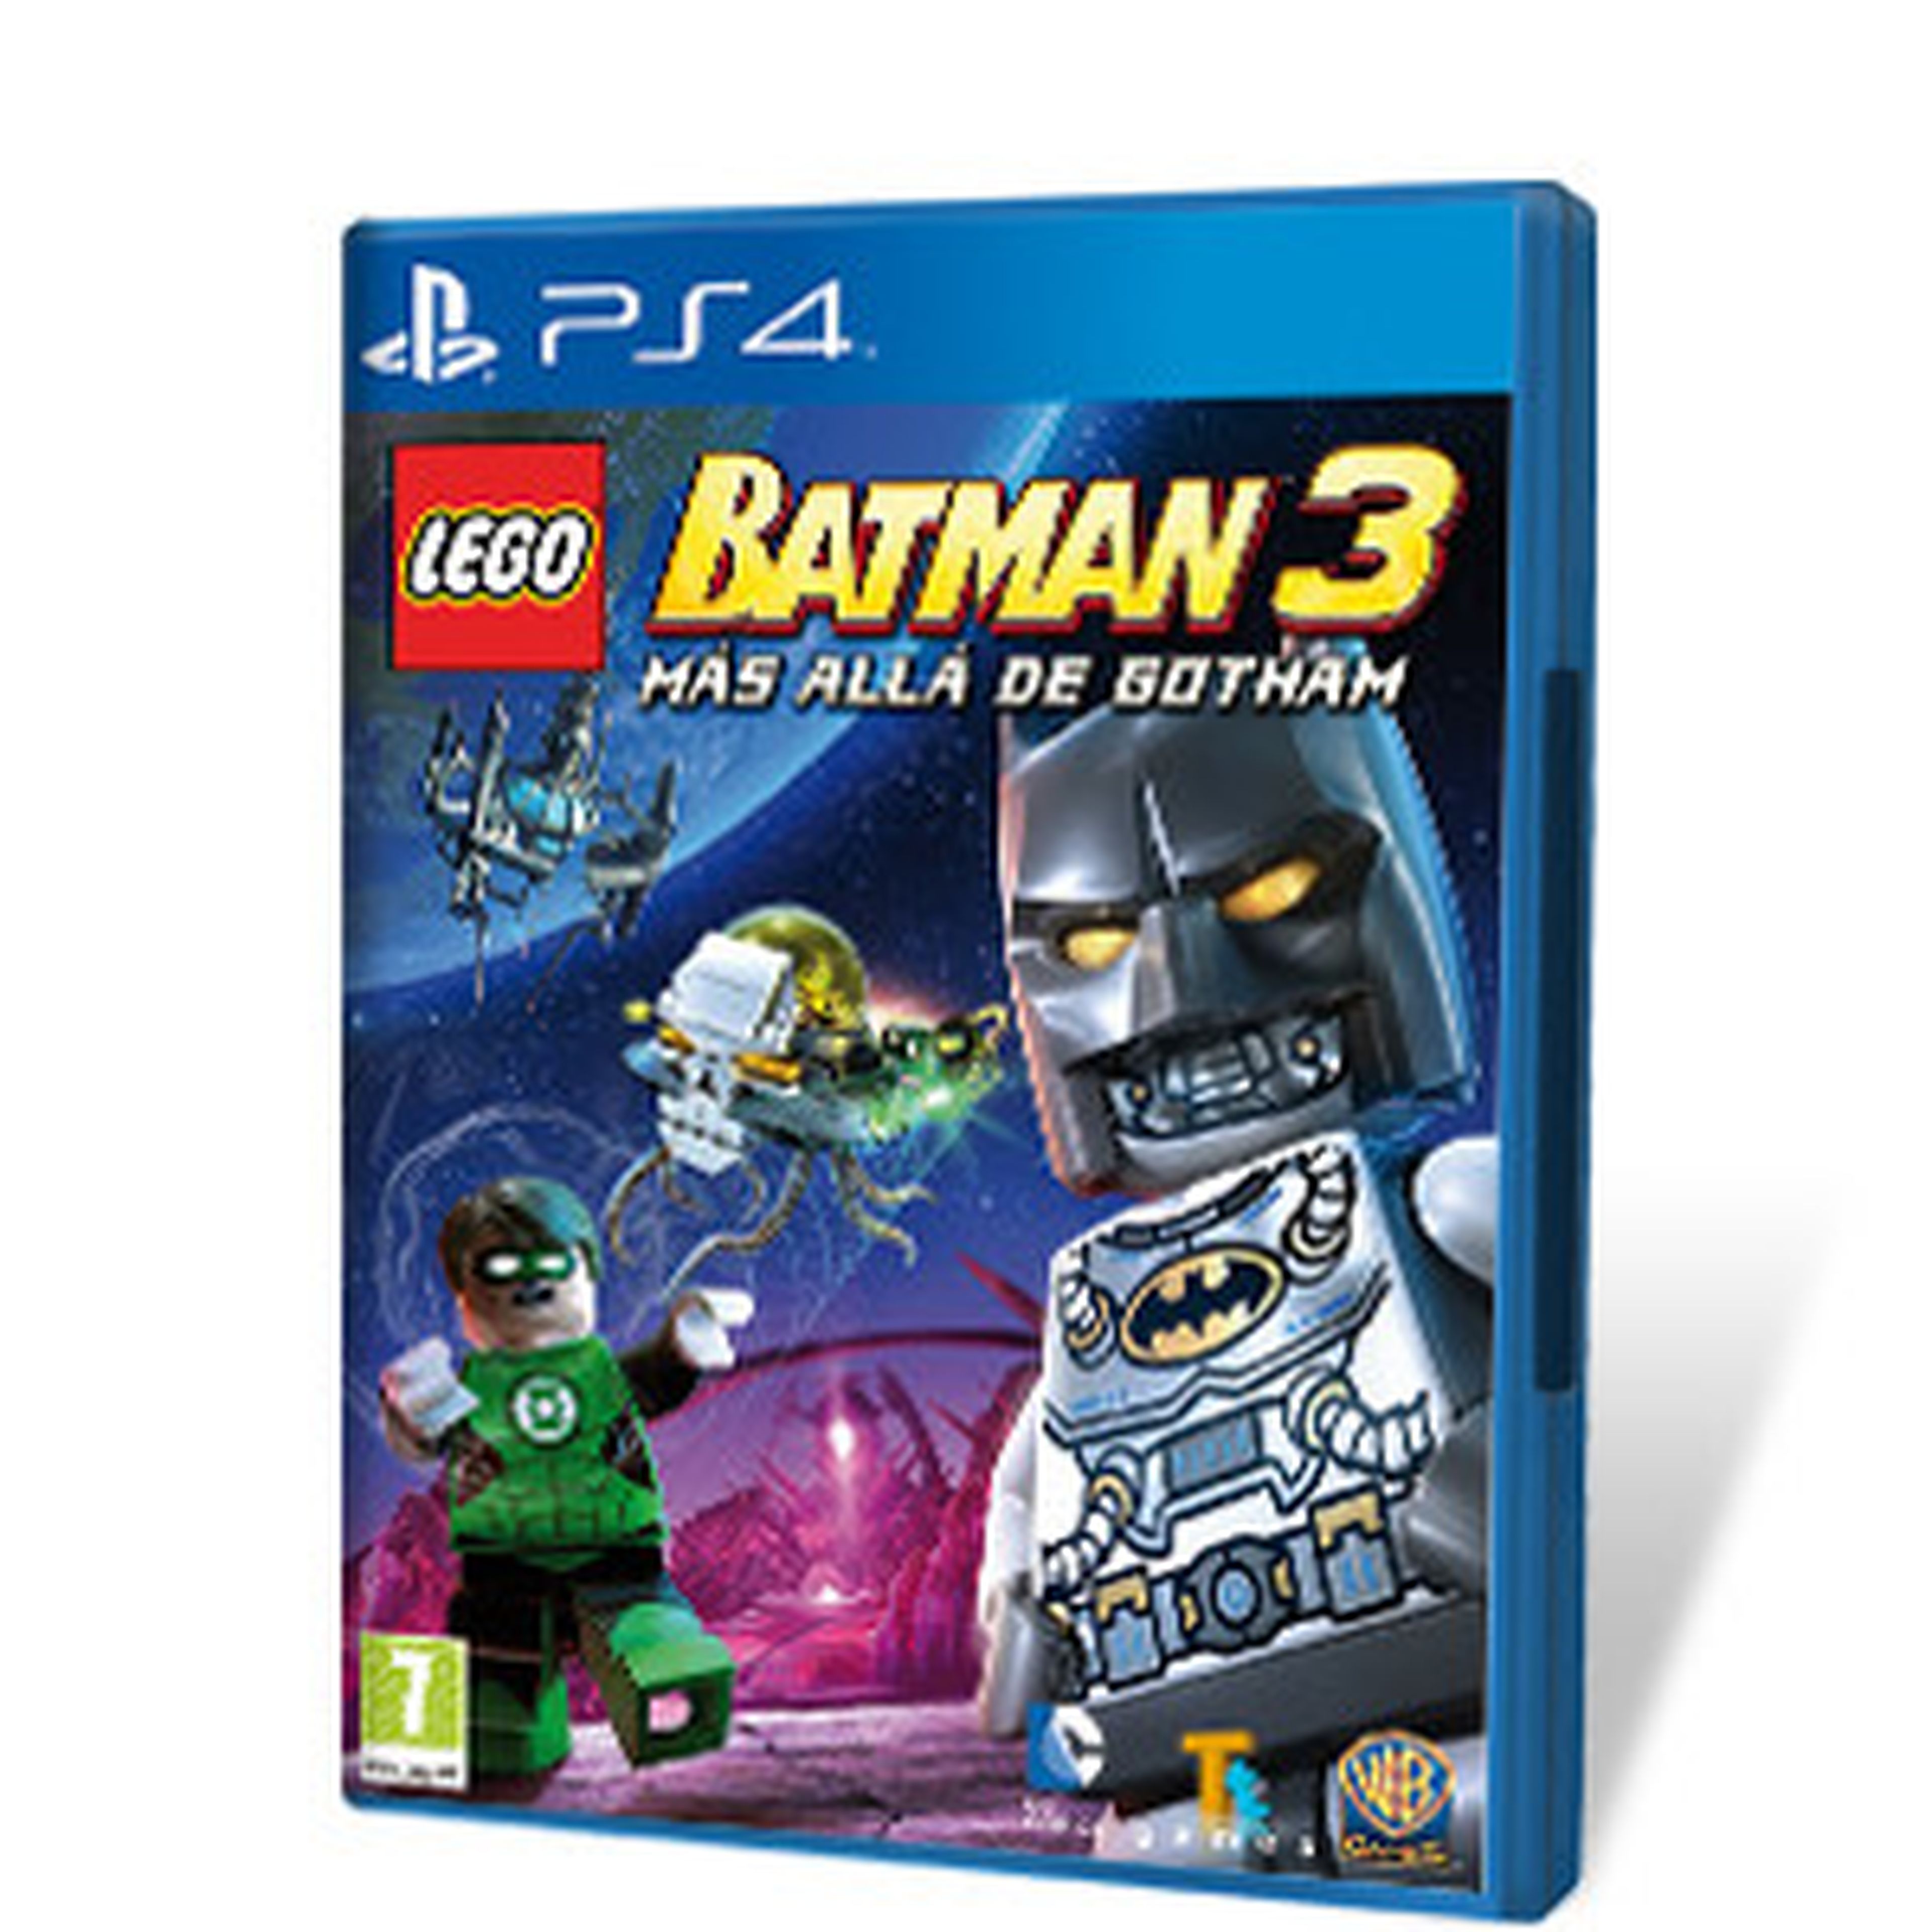 LEGO Batman 3 Más Allá de Gotham para PS4